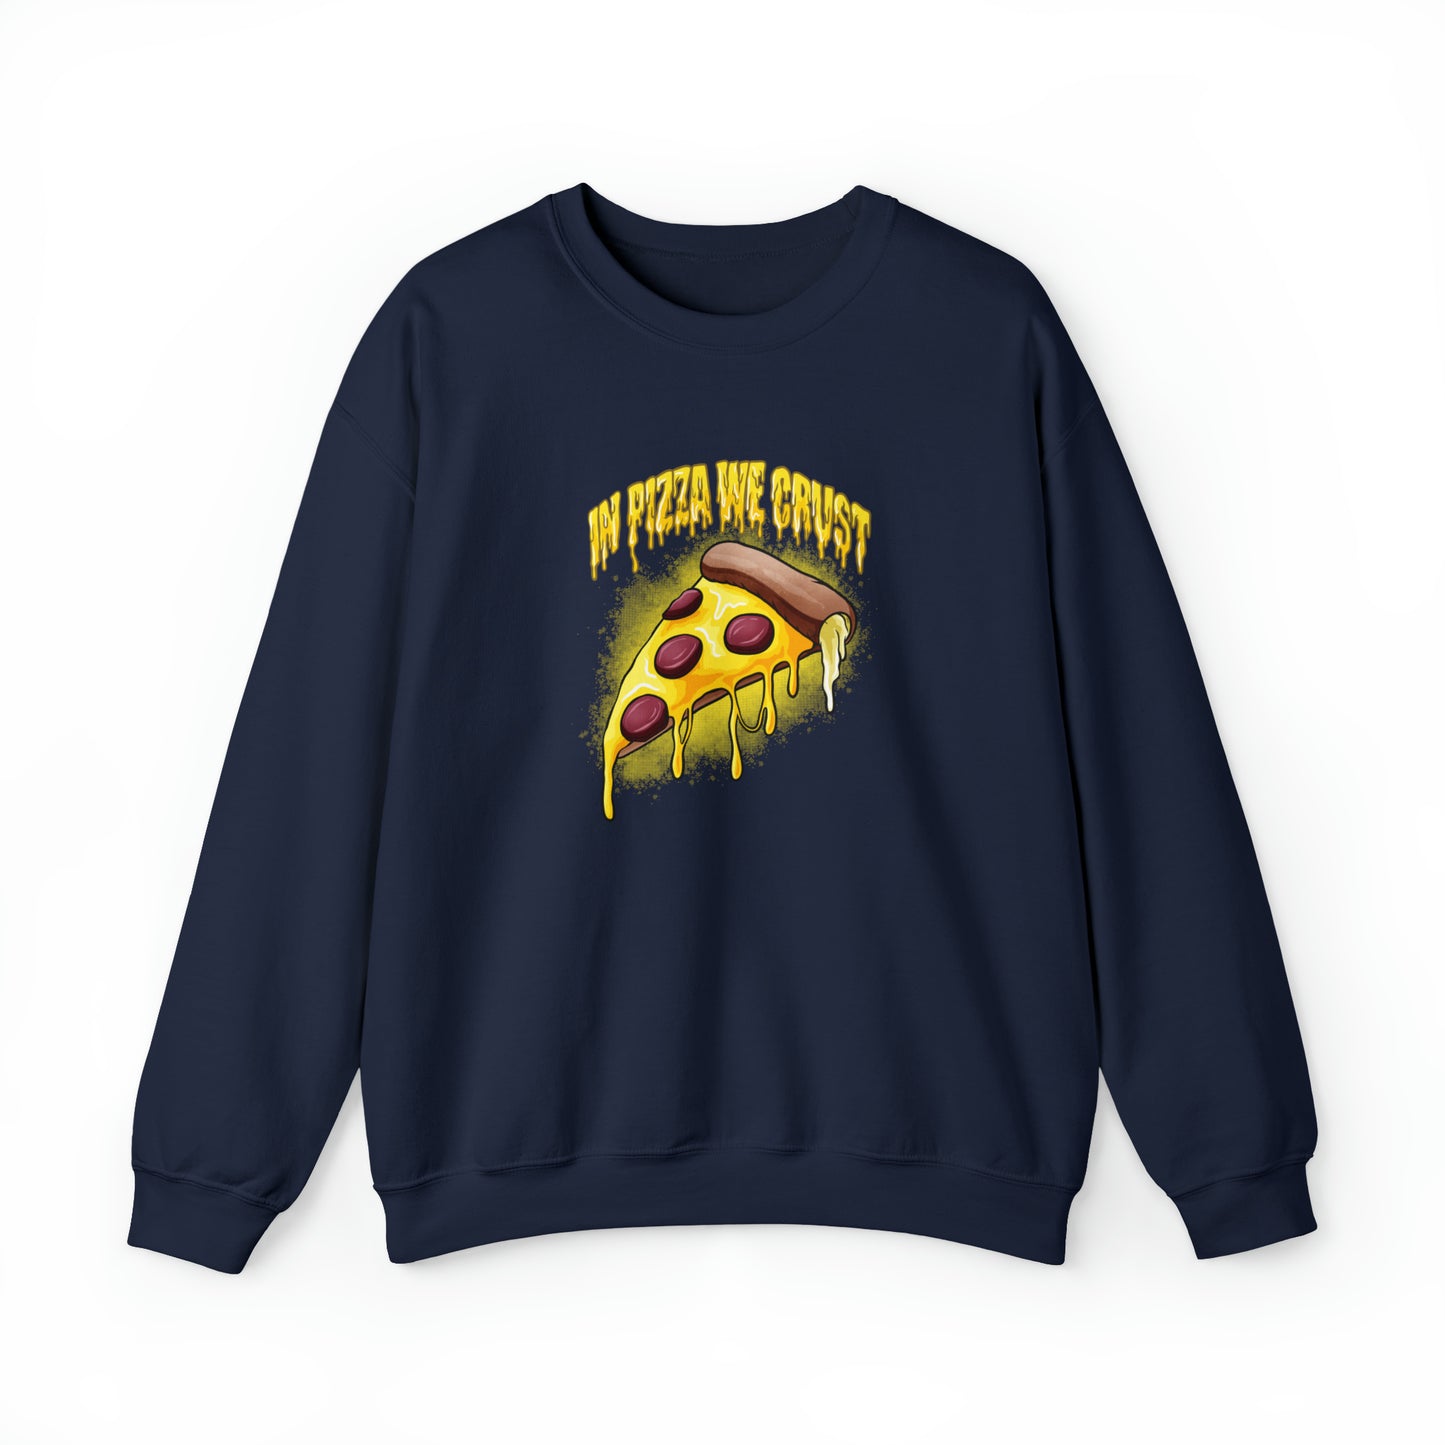 Custom Parody Crewneck Sweatshirt, In Pizza We Crust Design